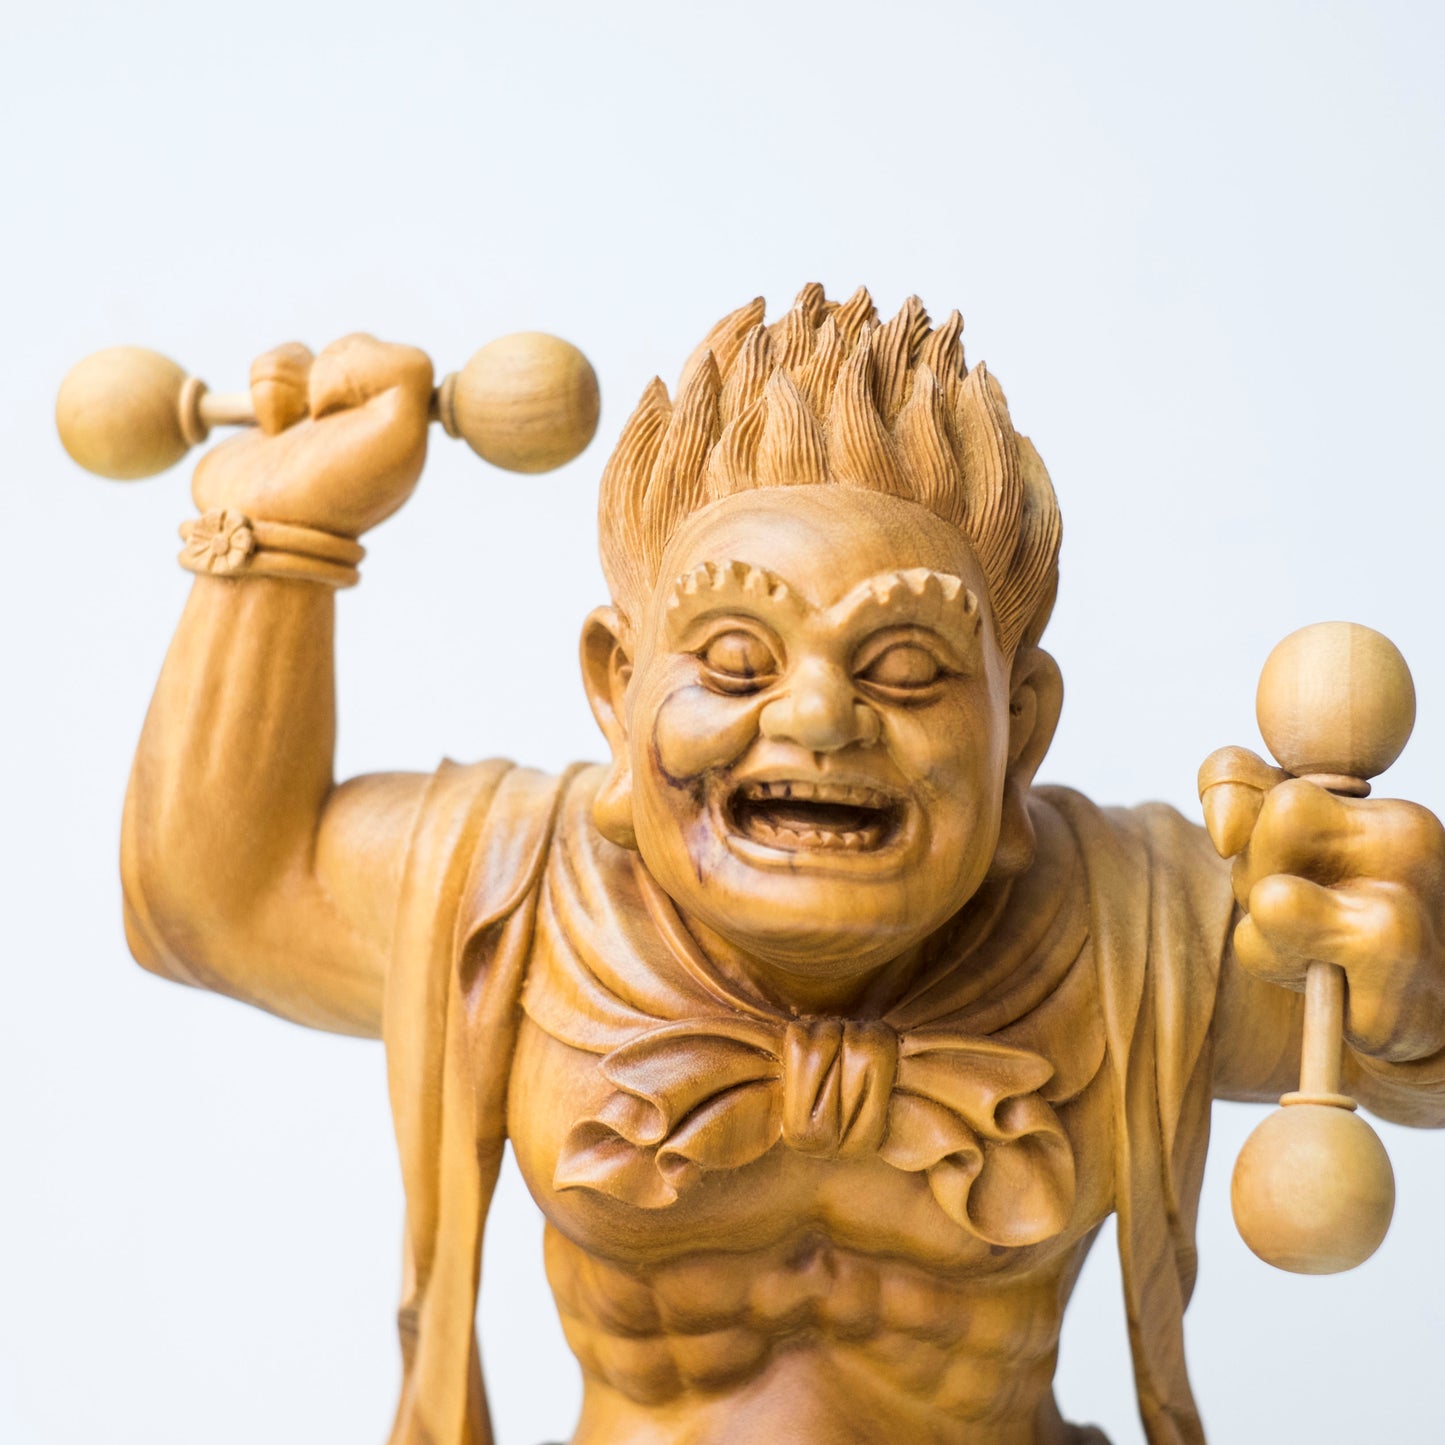 Japanese Fujin Raijin Thunder Lightning Buddhist Buddha Deva King Gods Protector Warrior Wooden Statue Pair